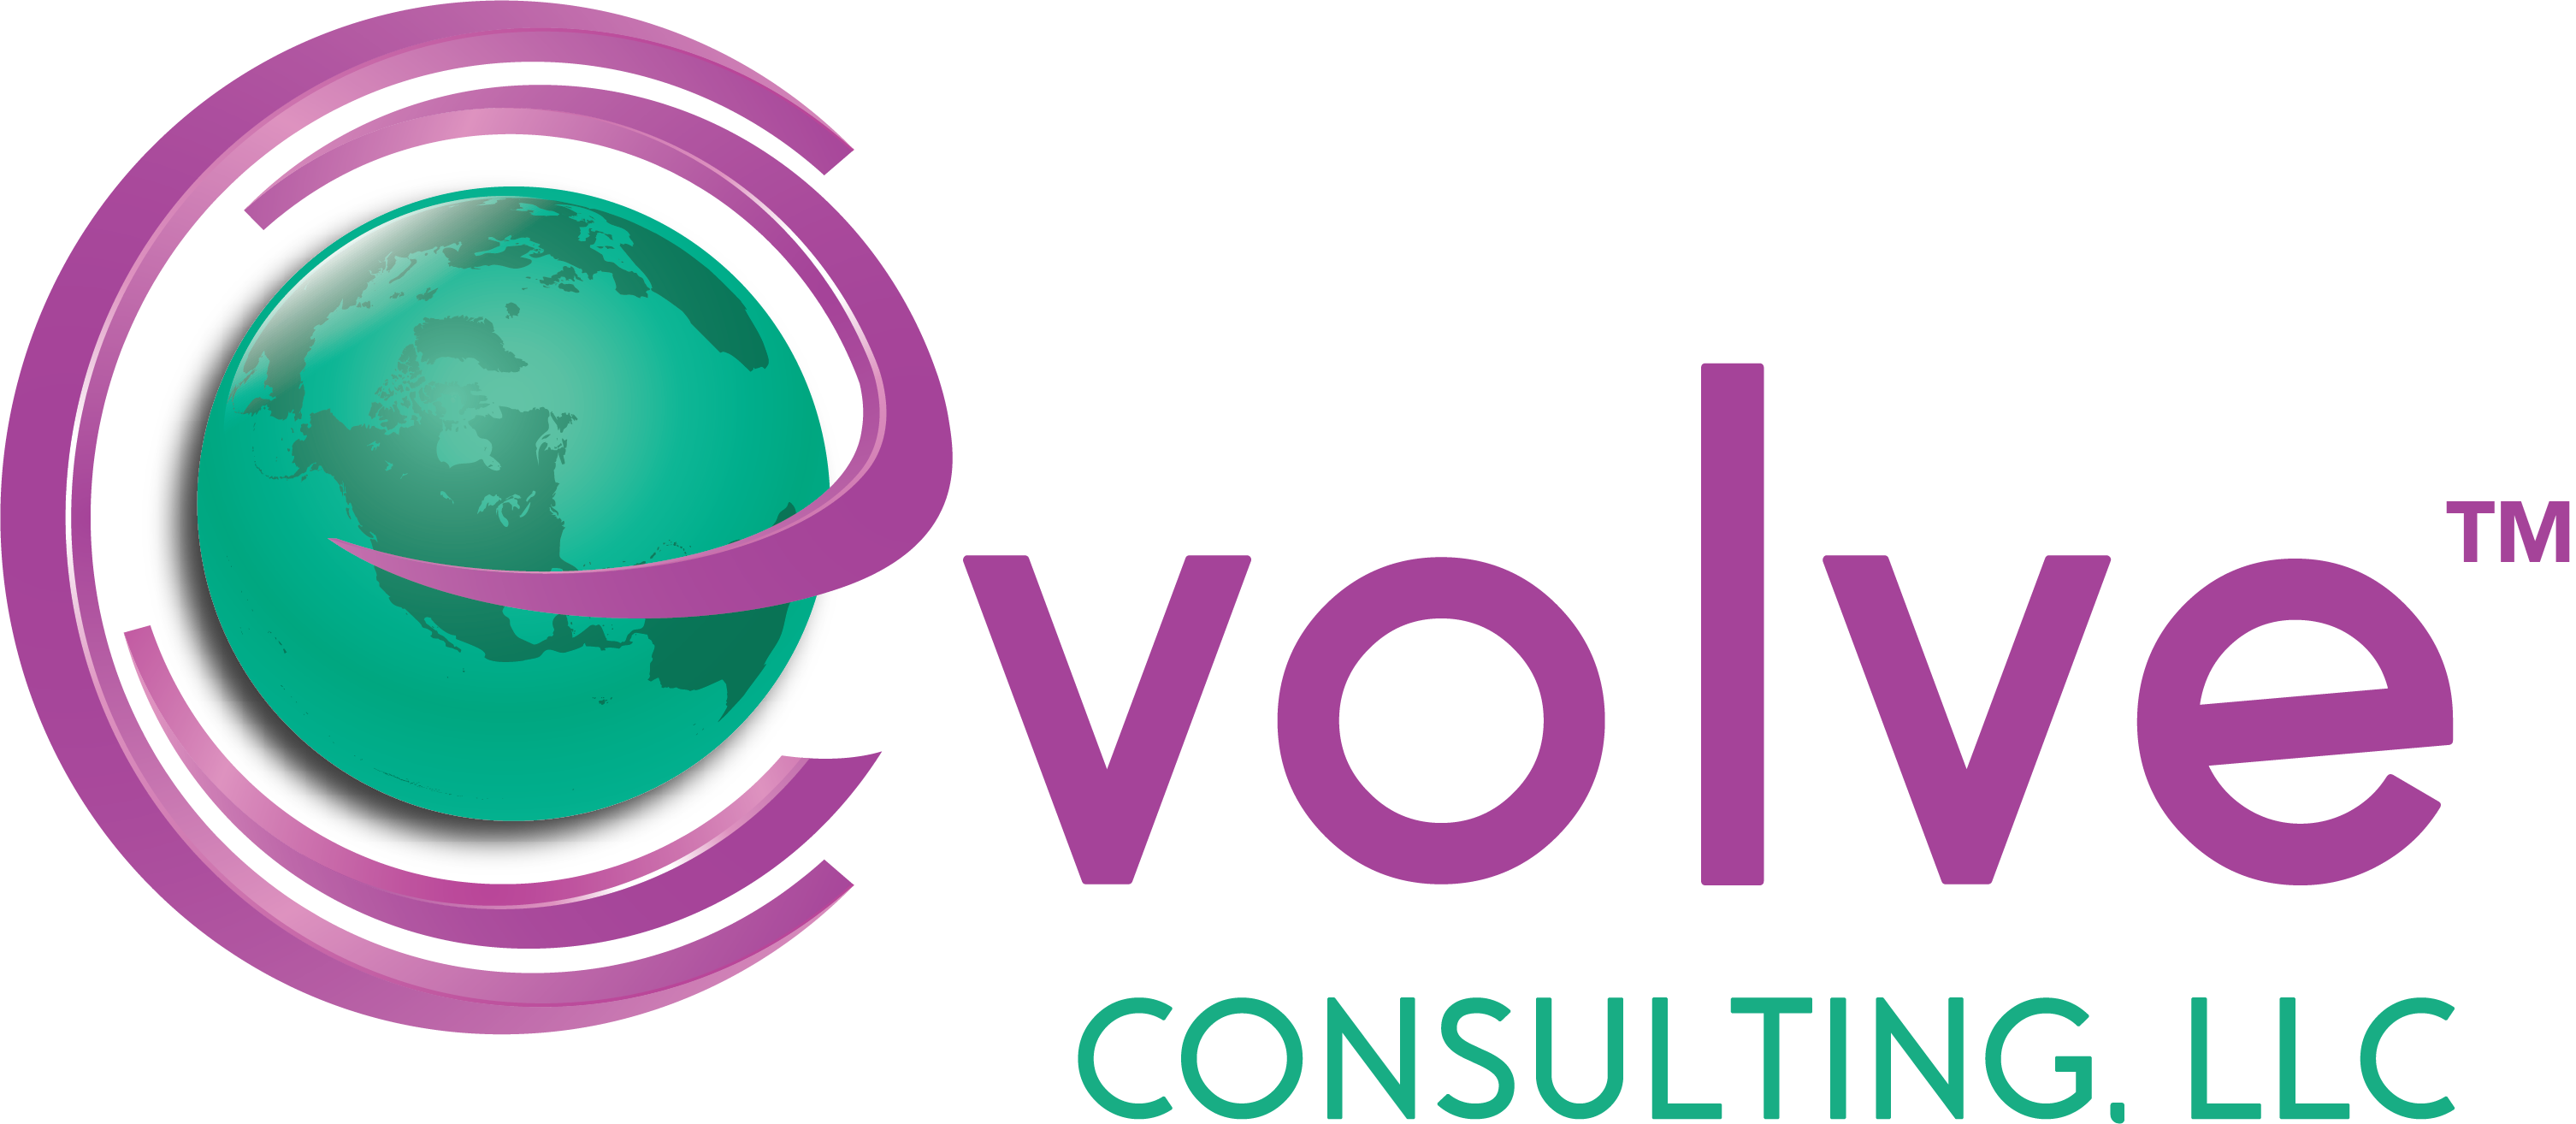 Evolve Consulting, LLC